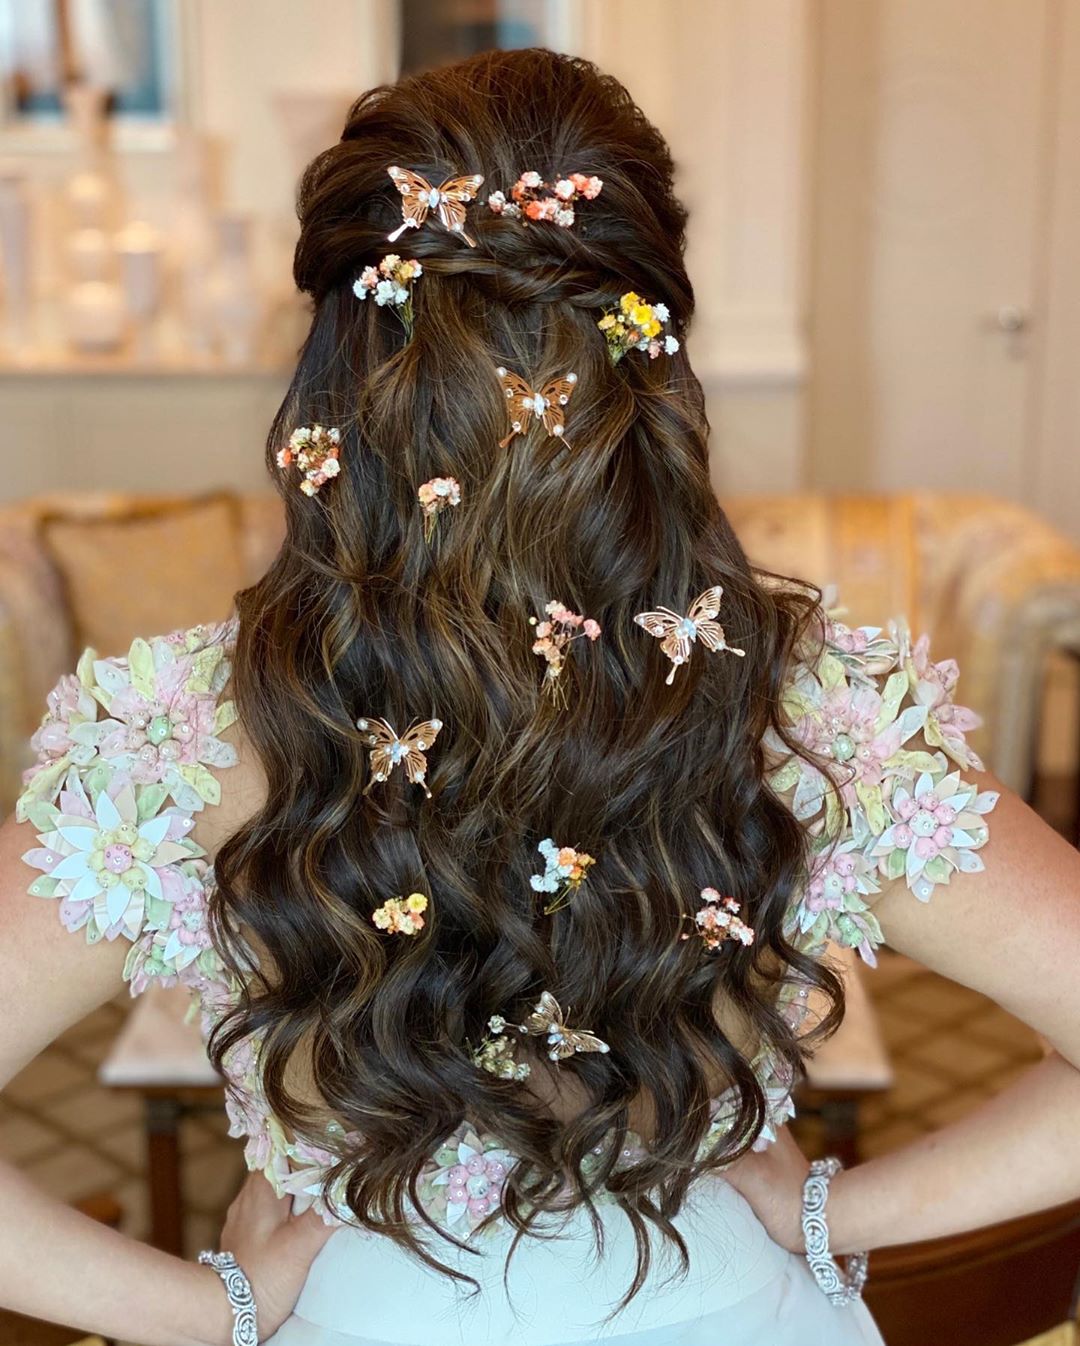 Latest Hairstyles For The Stunning Bride! | Weddingplz